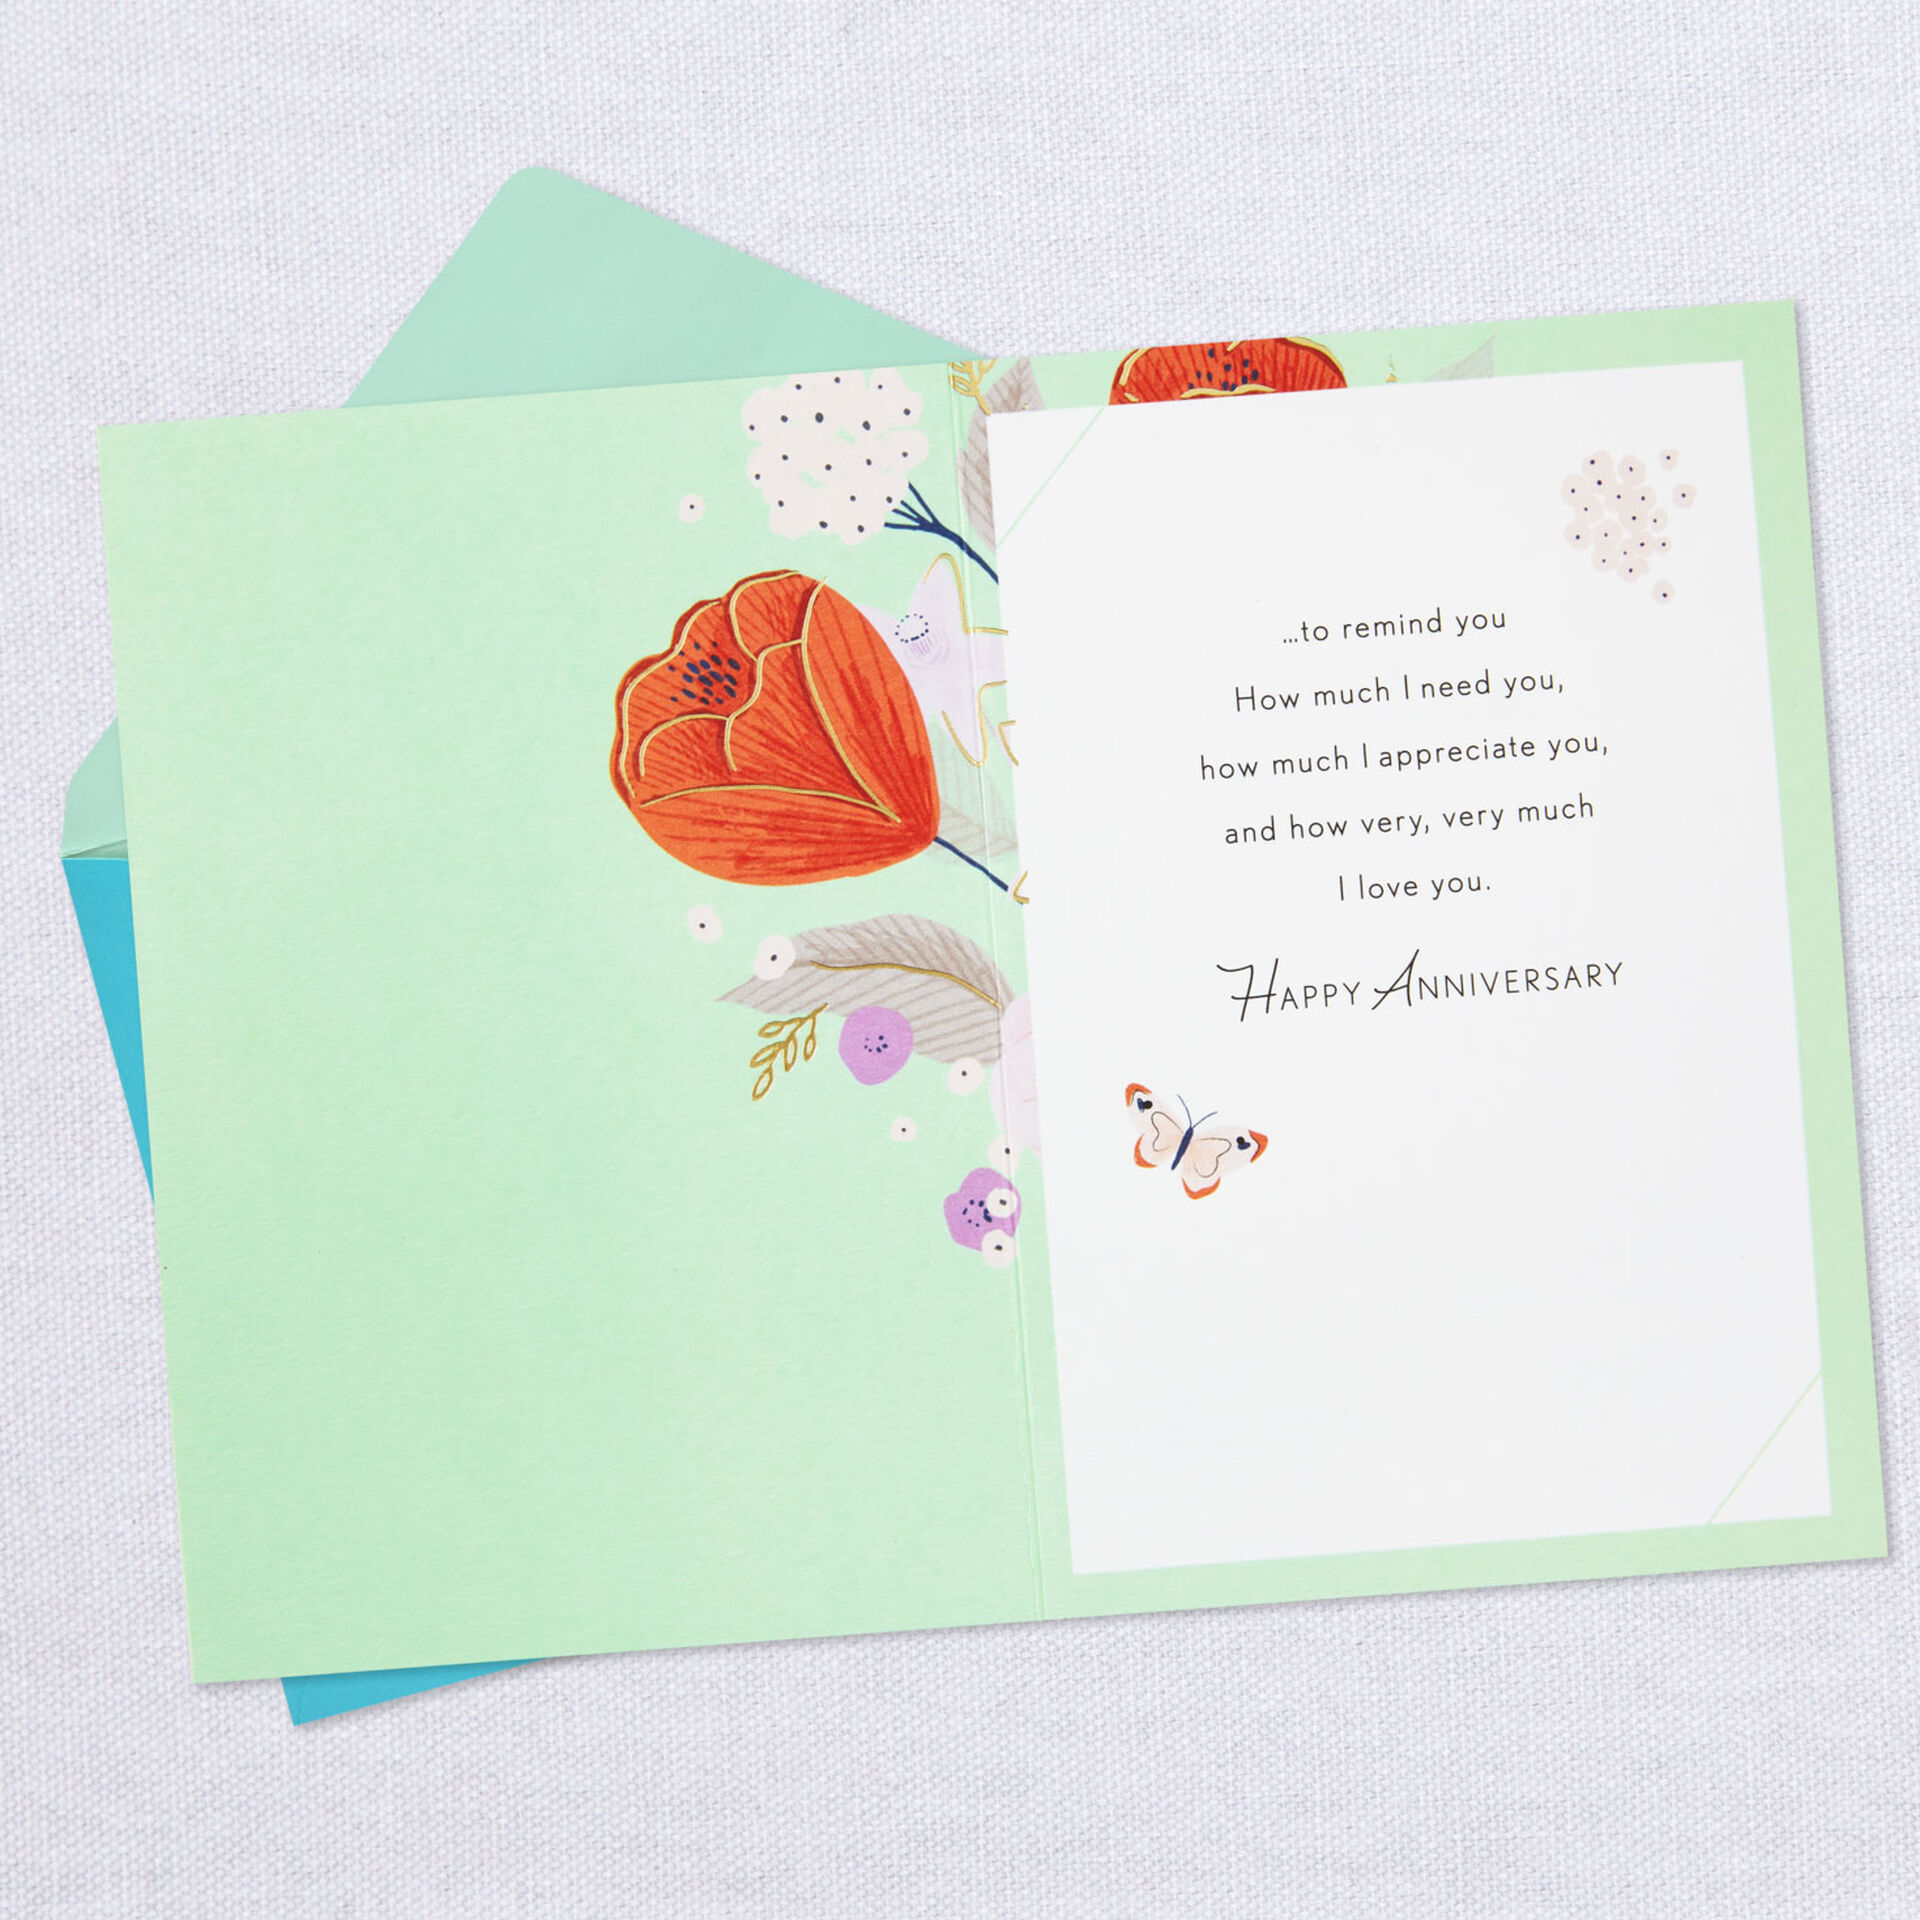 Flowers-Springing-From-Envelope-Anniversary-Card_499AVY2962_03